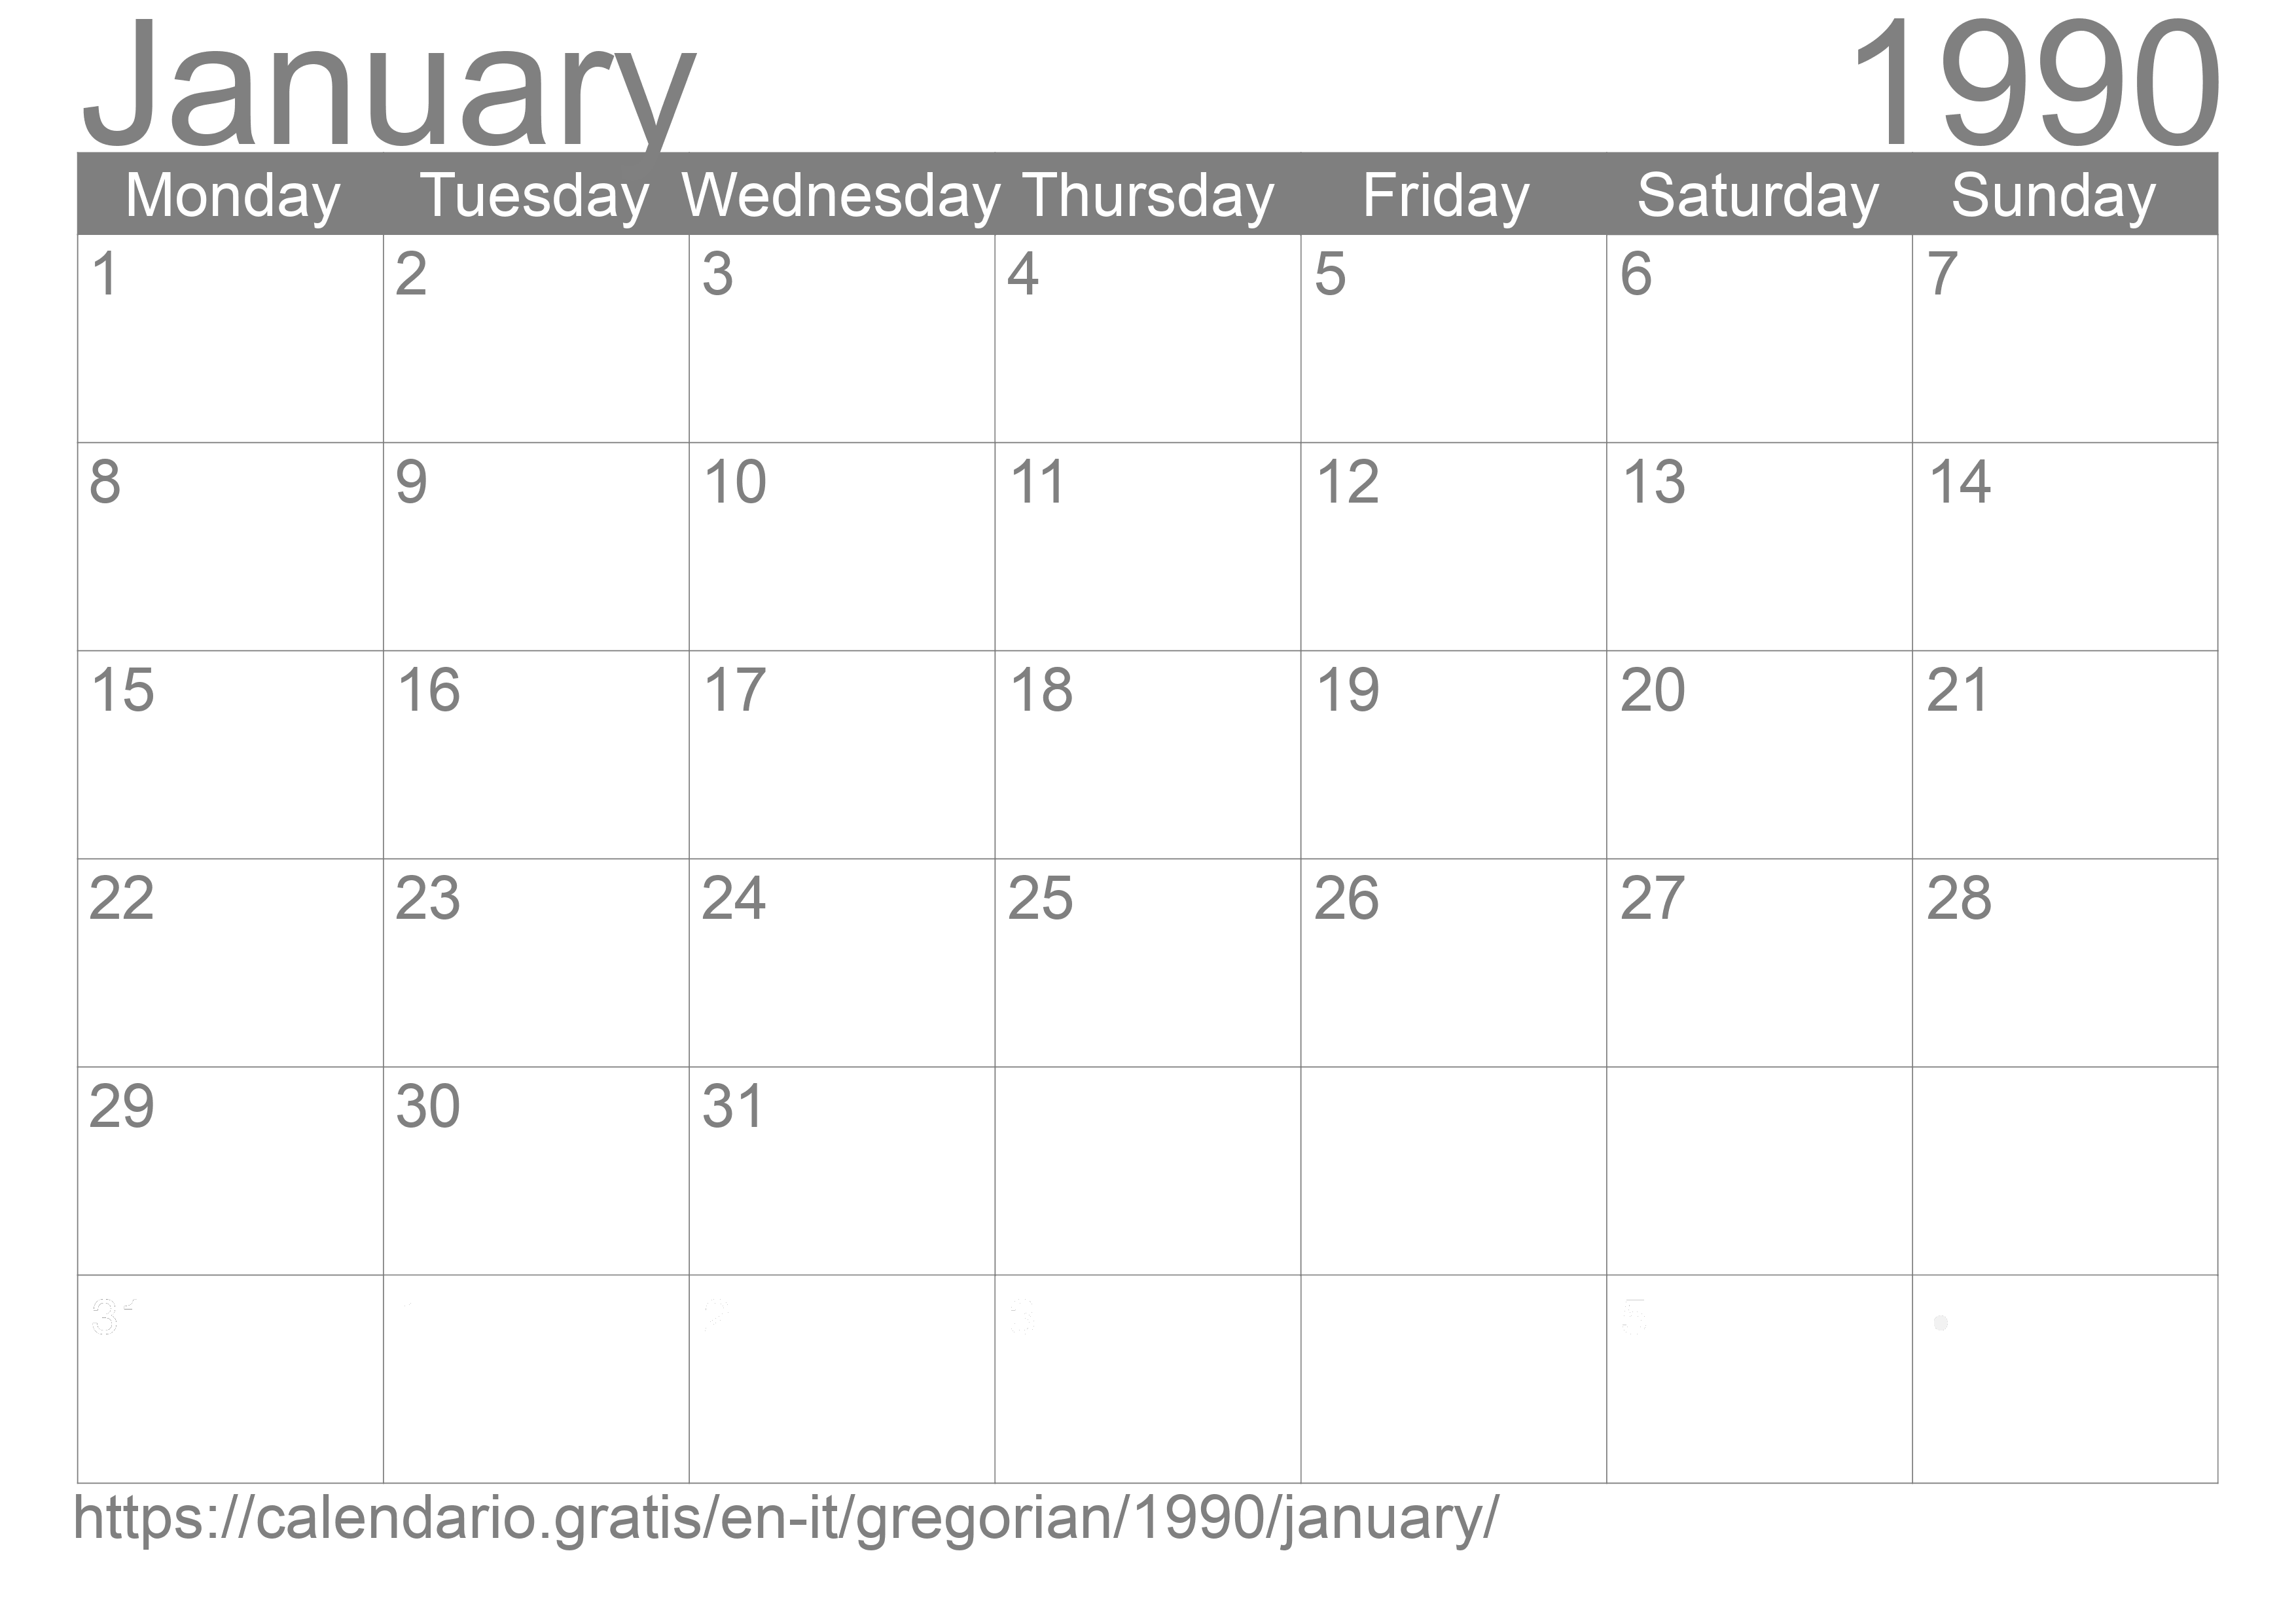 Calendar January 1990 to print